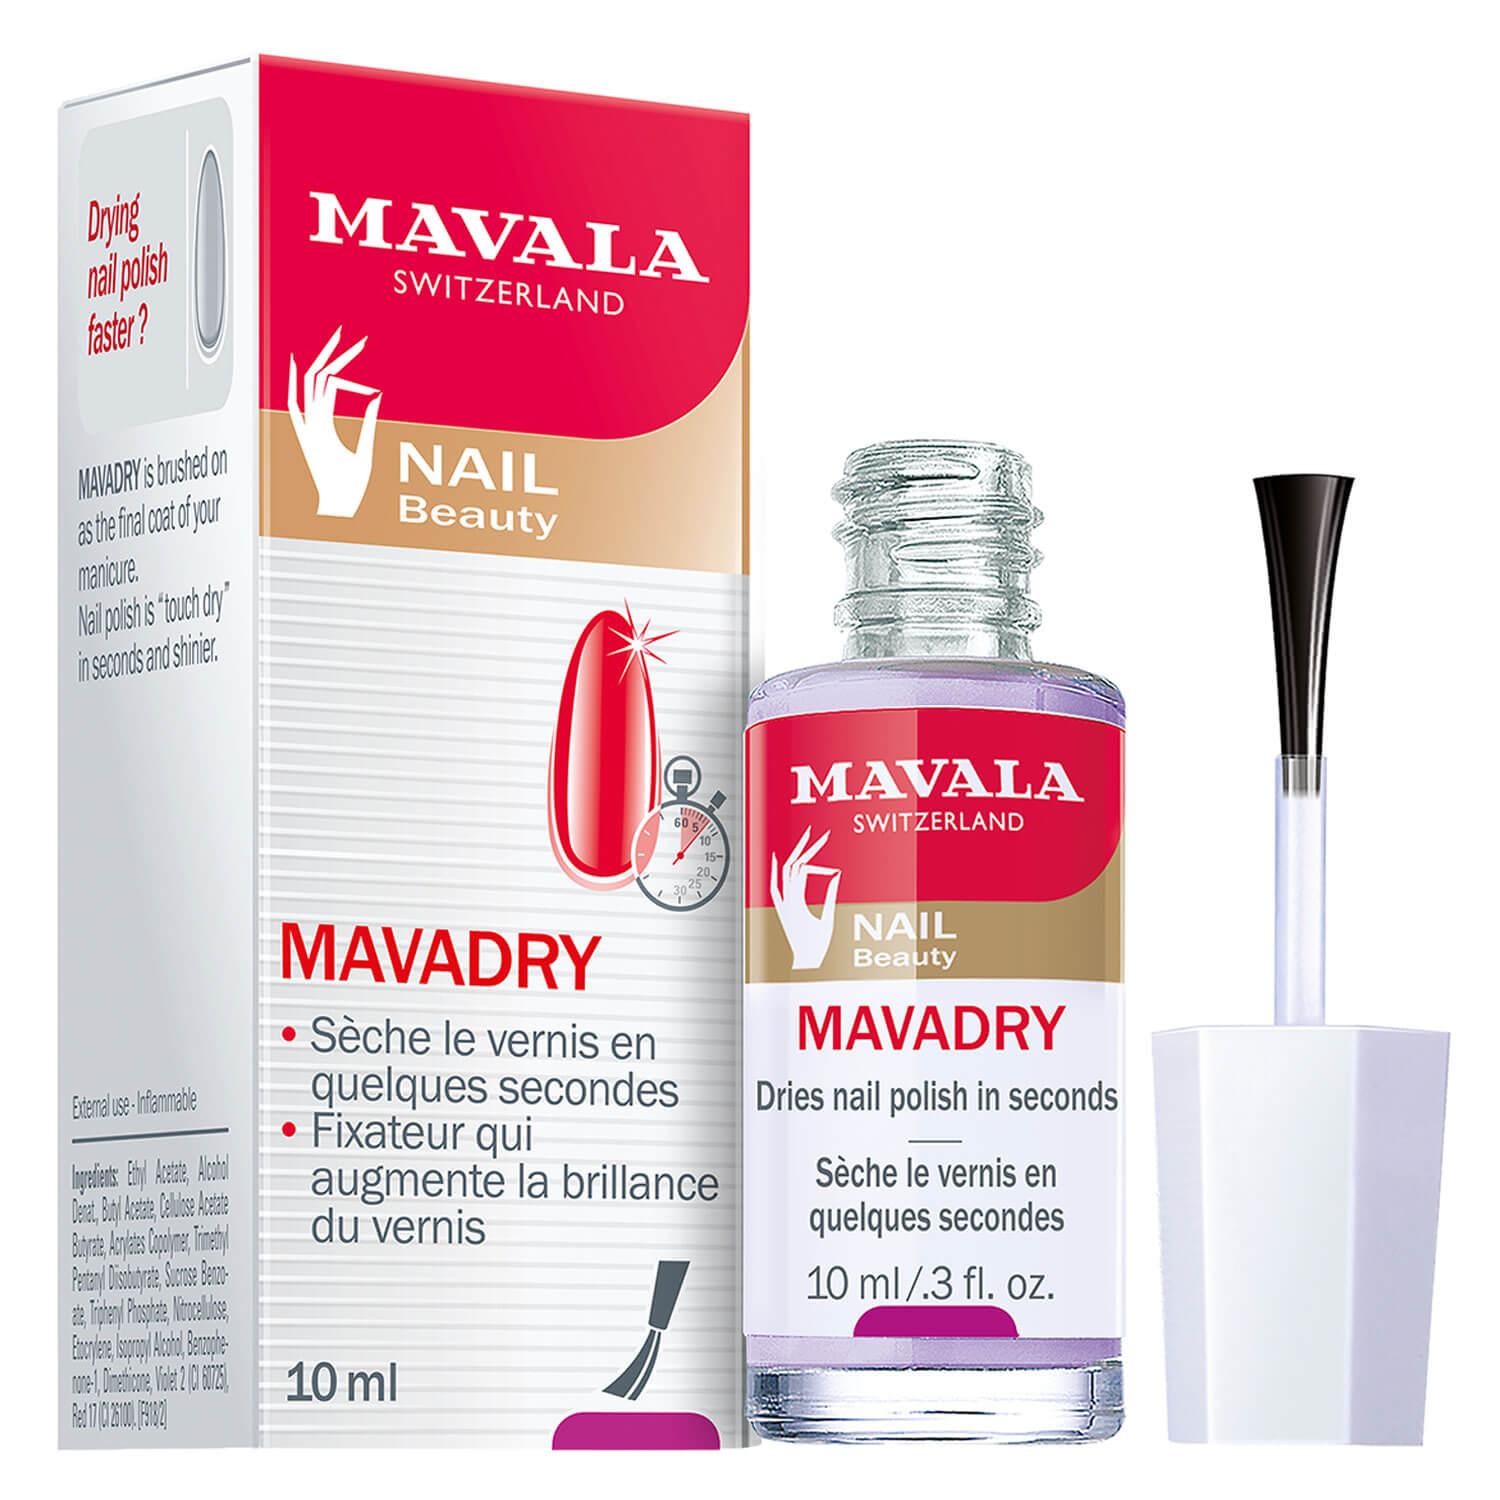 MAVALA Care - Mavadry